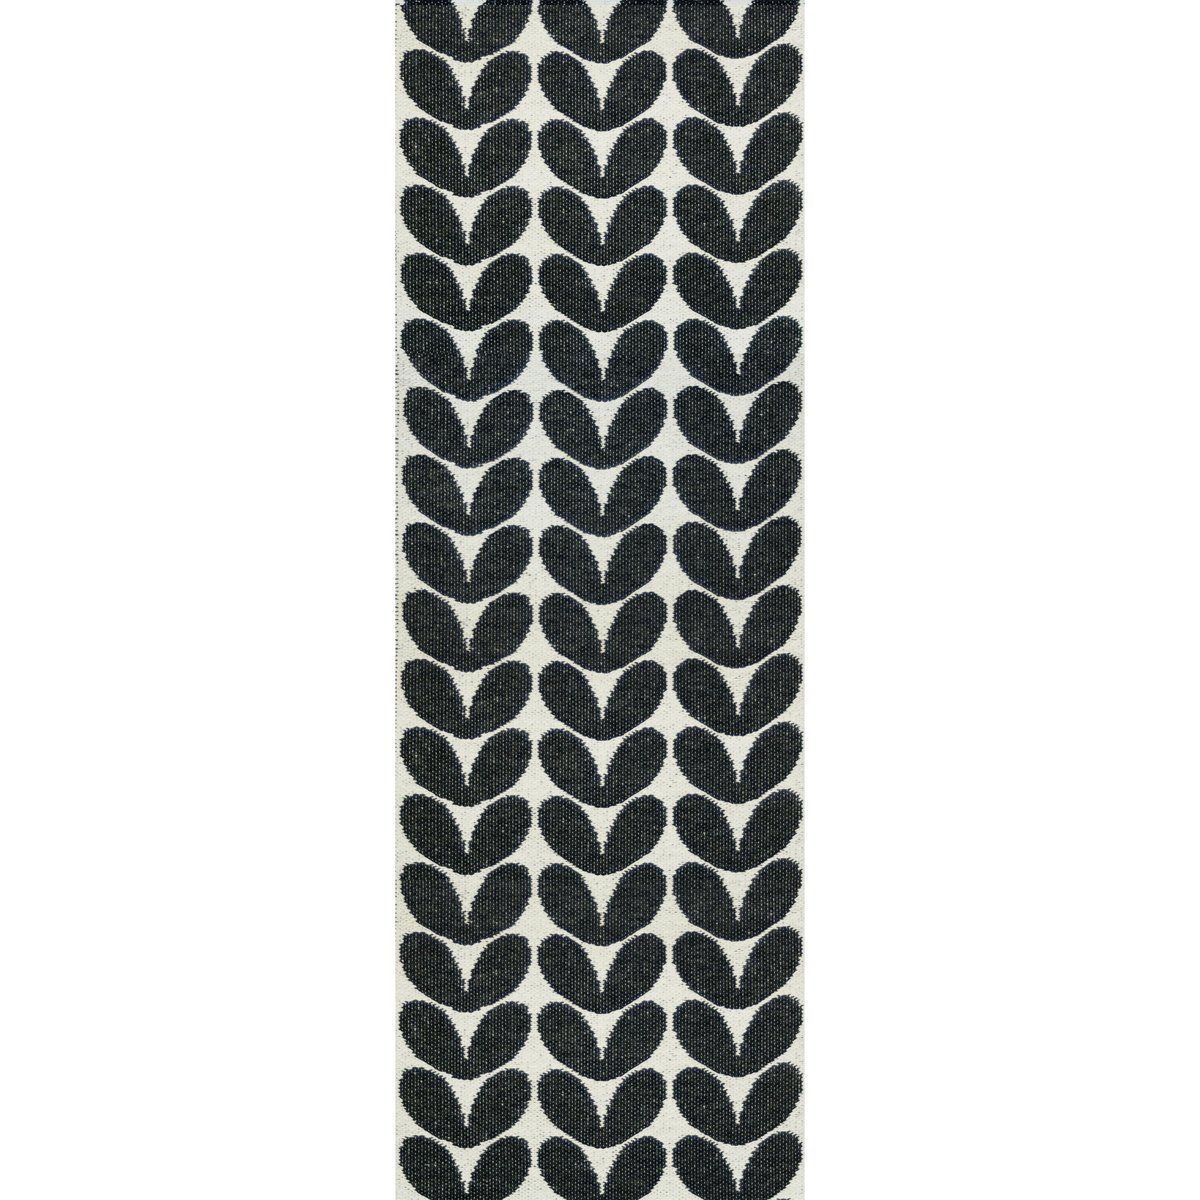 Bilde av Brita Sweden Karin gulvteppe svart 70x150 cm